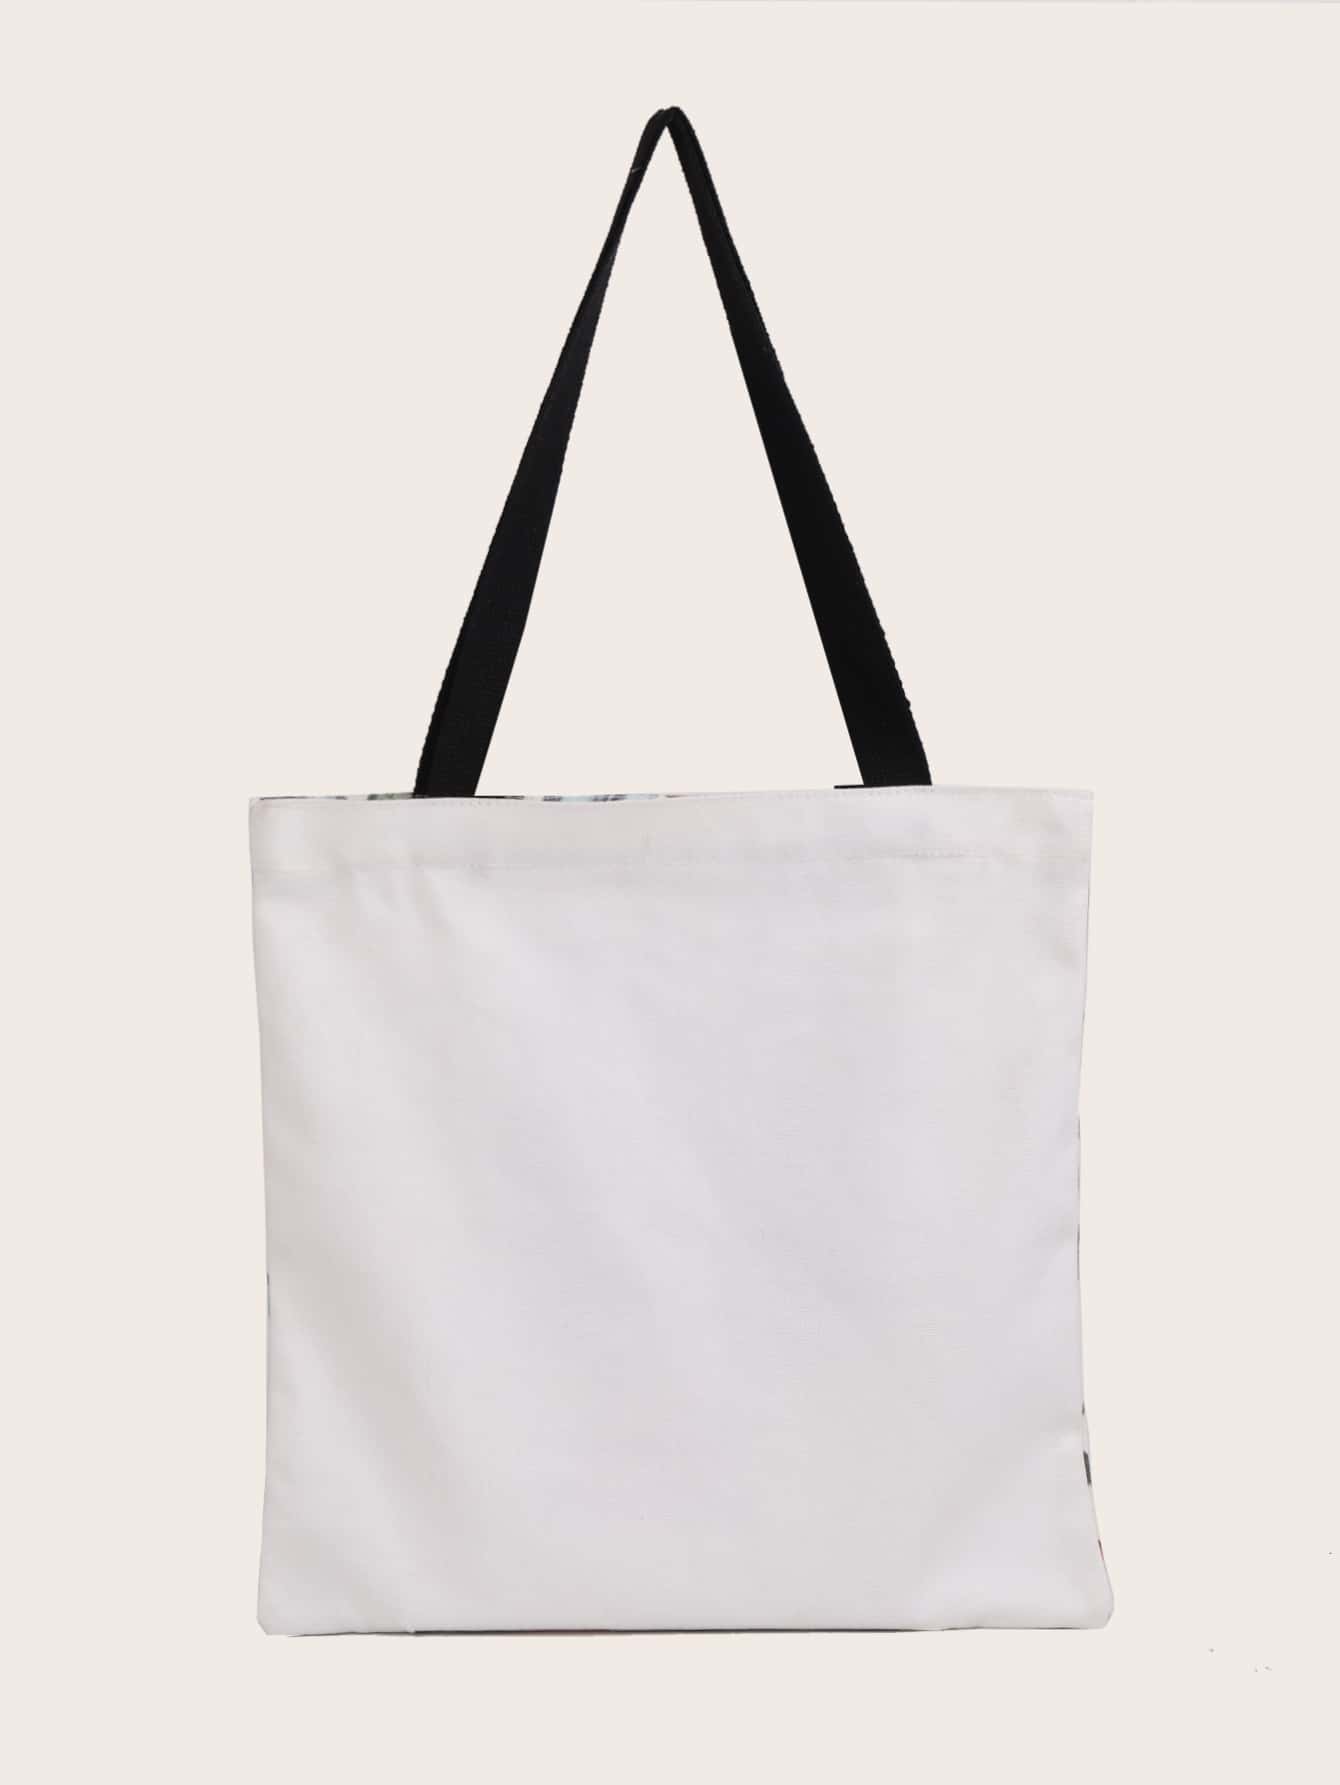 Fruit Tote Bag (White) - YOUAREMYPOISON